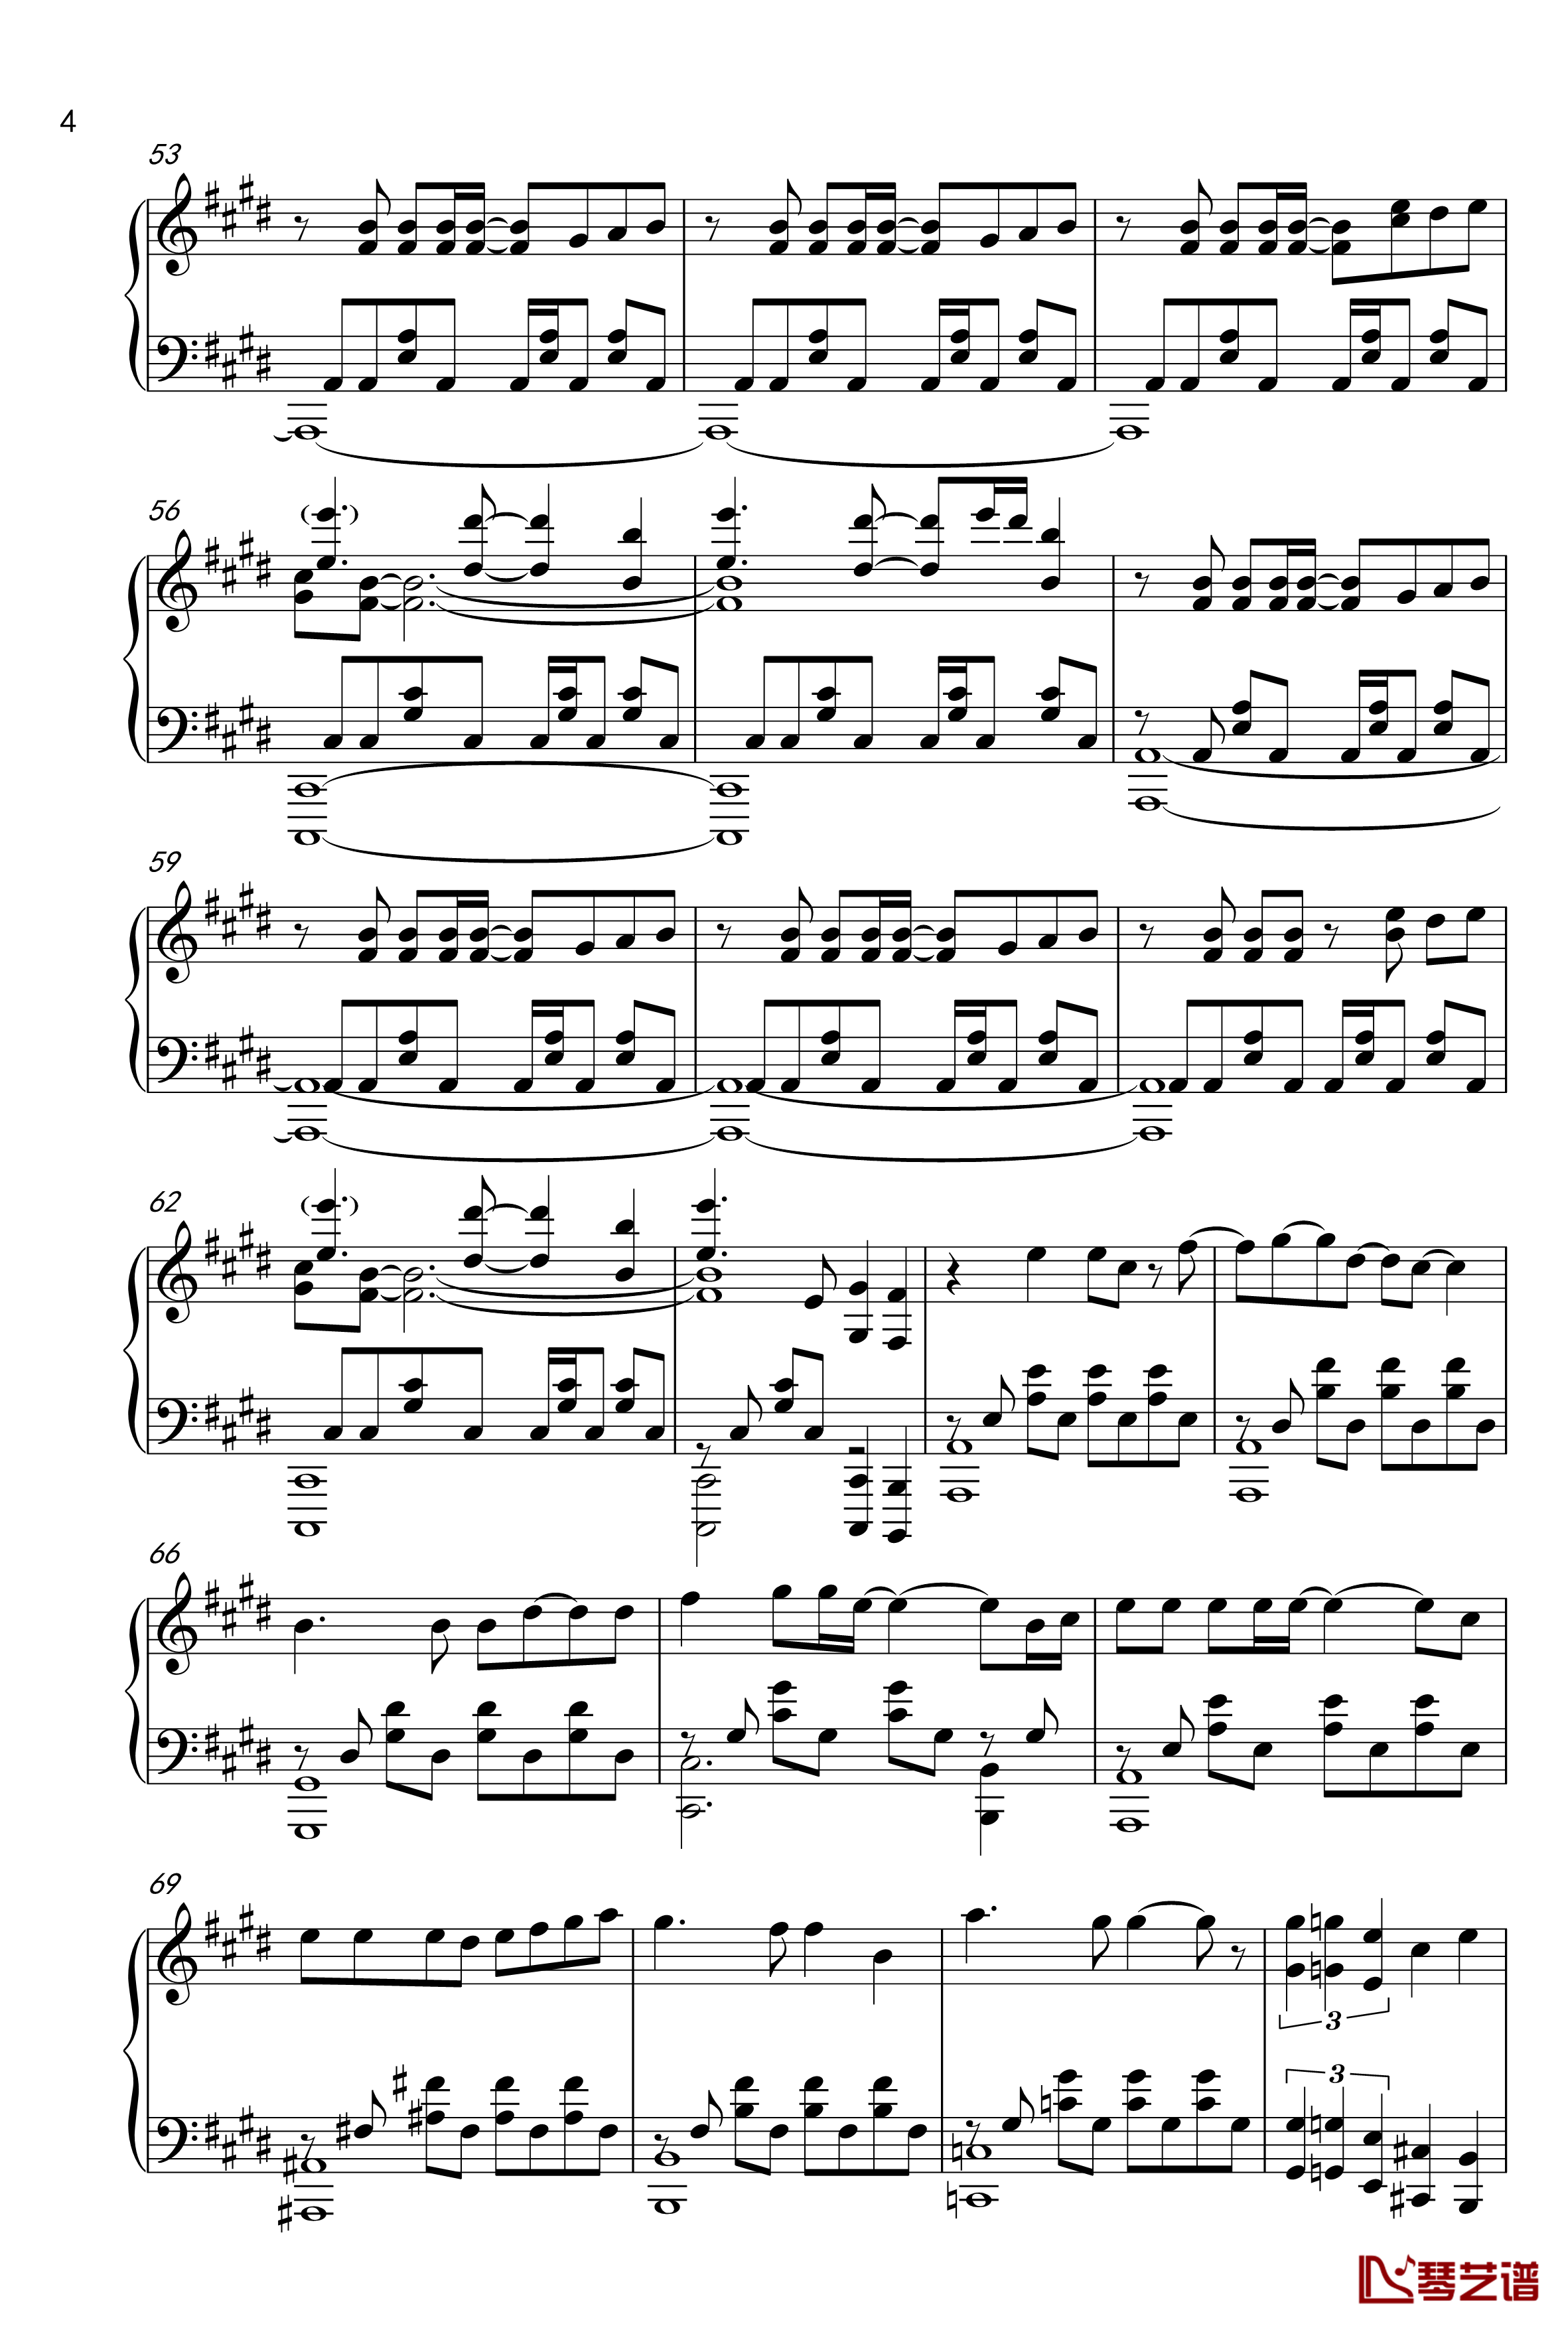 OVERLAP 钢琴谱-《游戏王》第一部190-224话OP-游戏王4